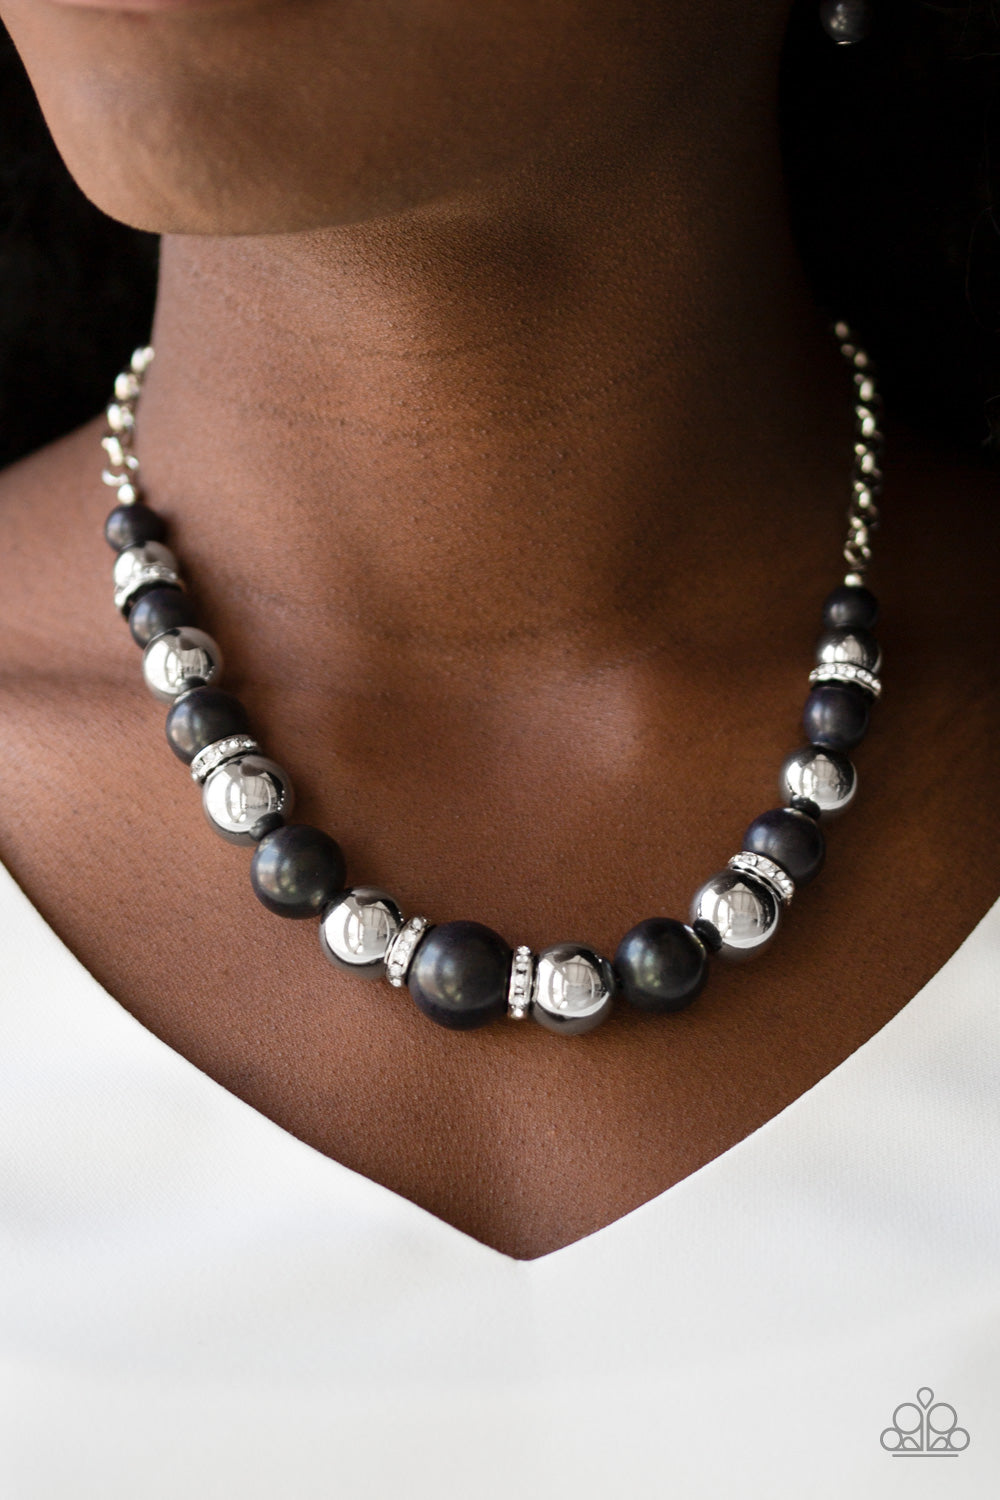 The Ruling Class - Black Stone Necklace Set & Bracelet Combo - Princess Glam Shop